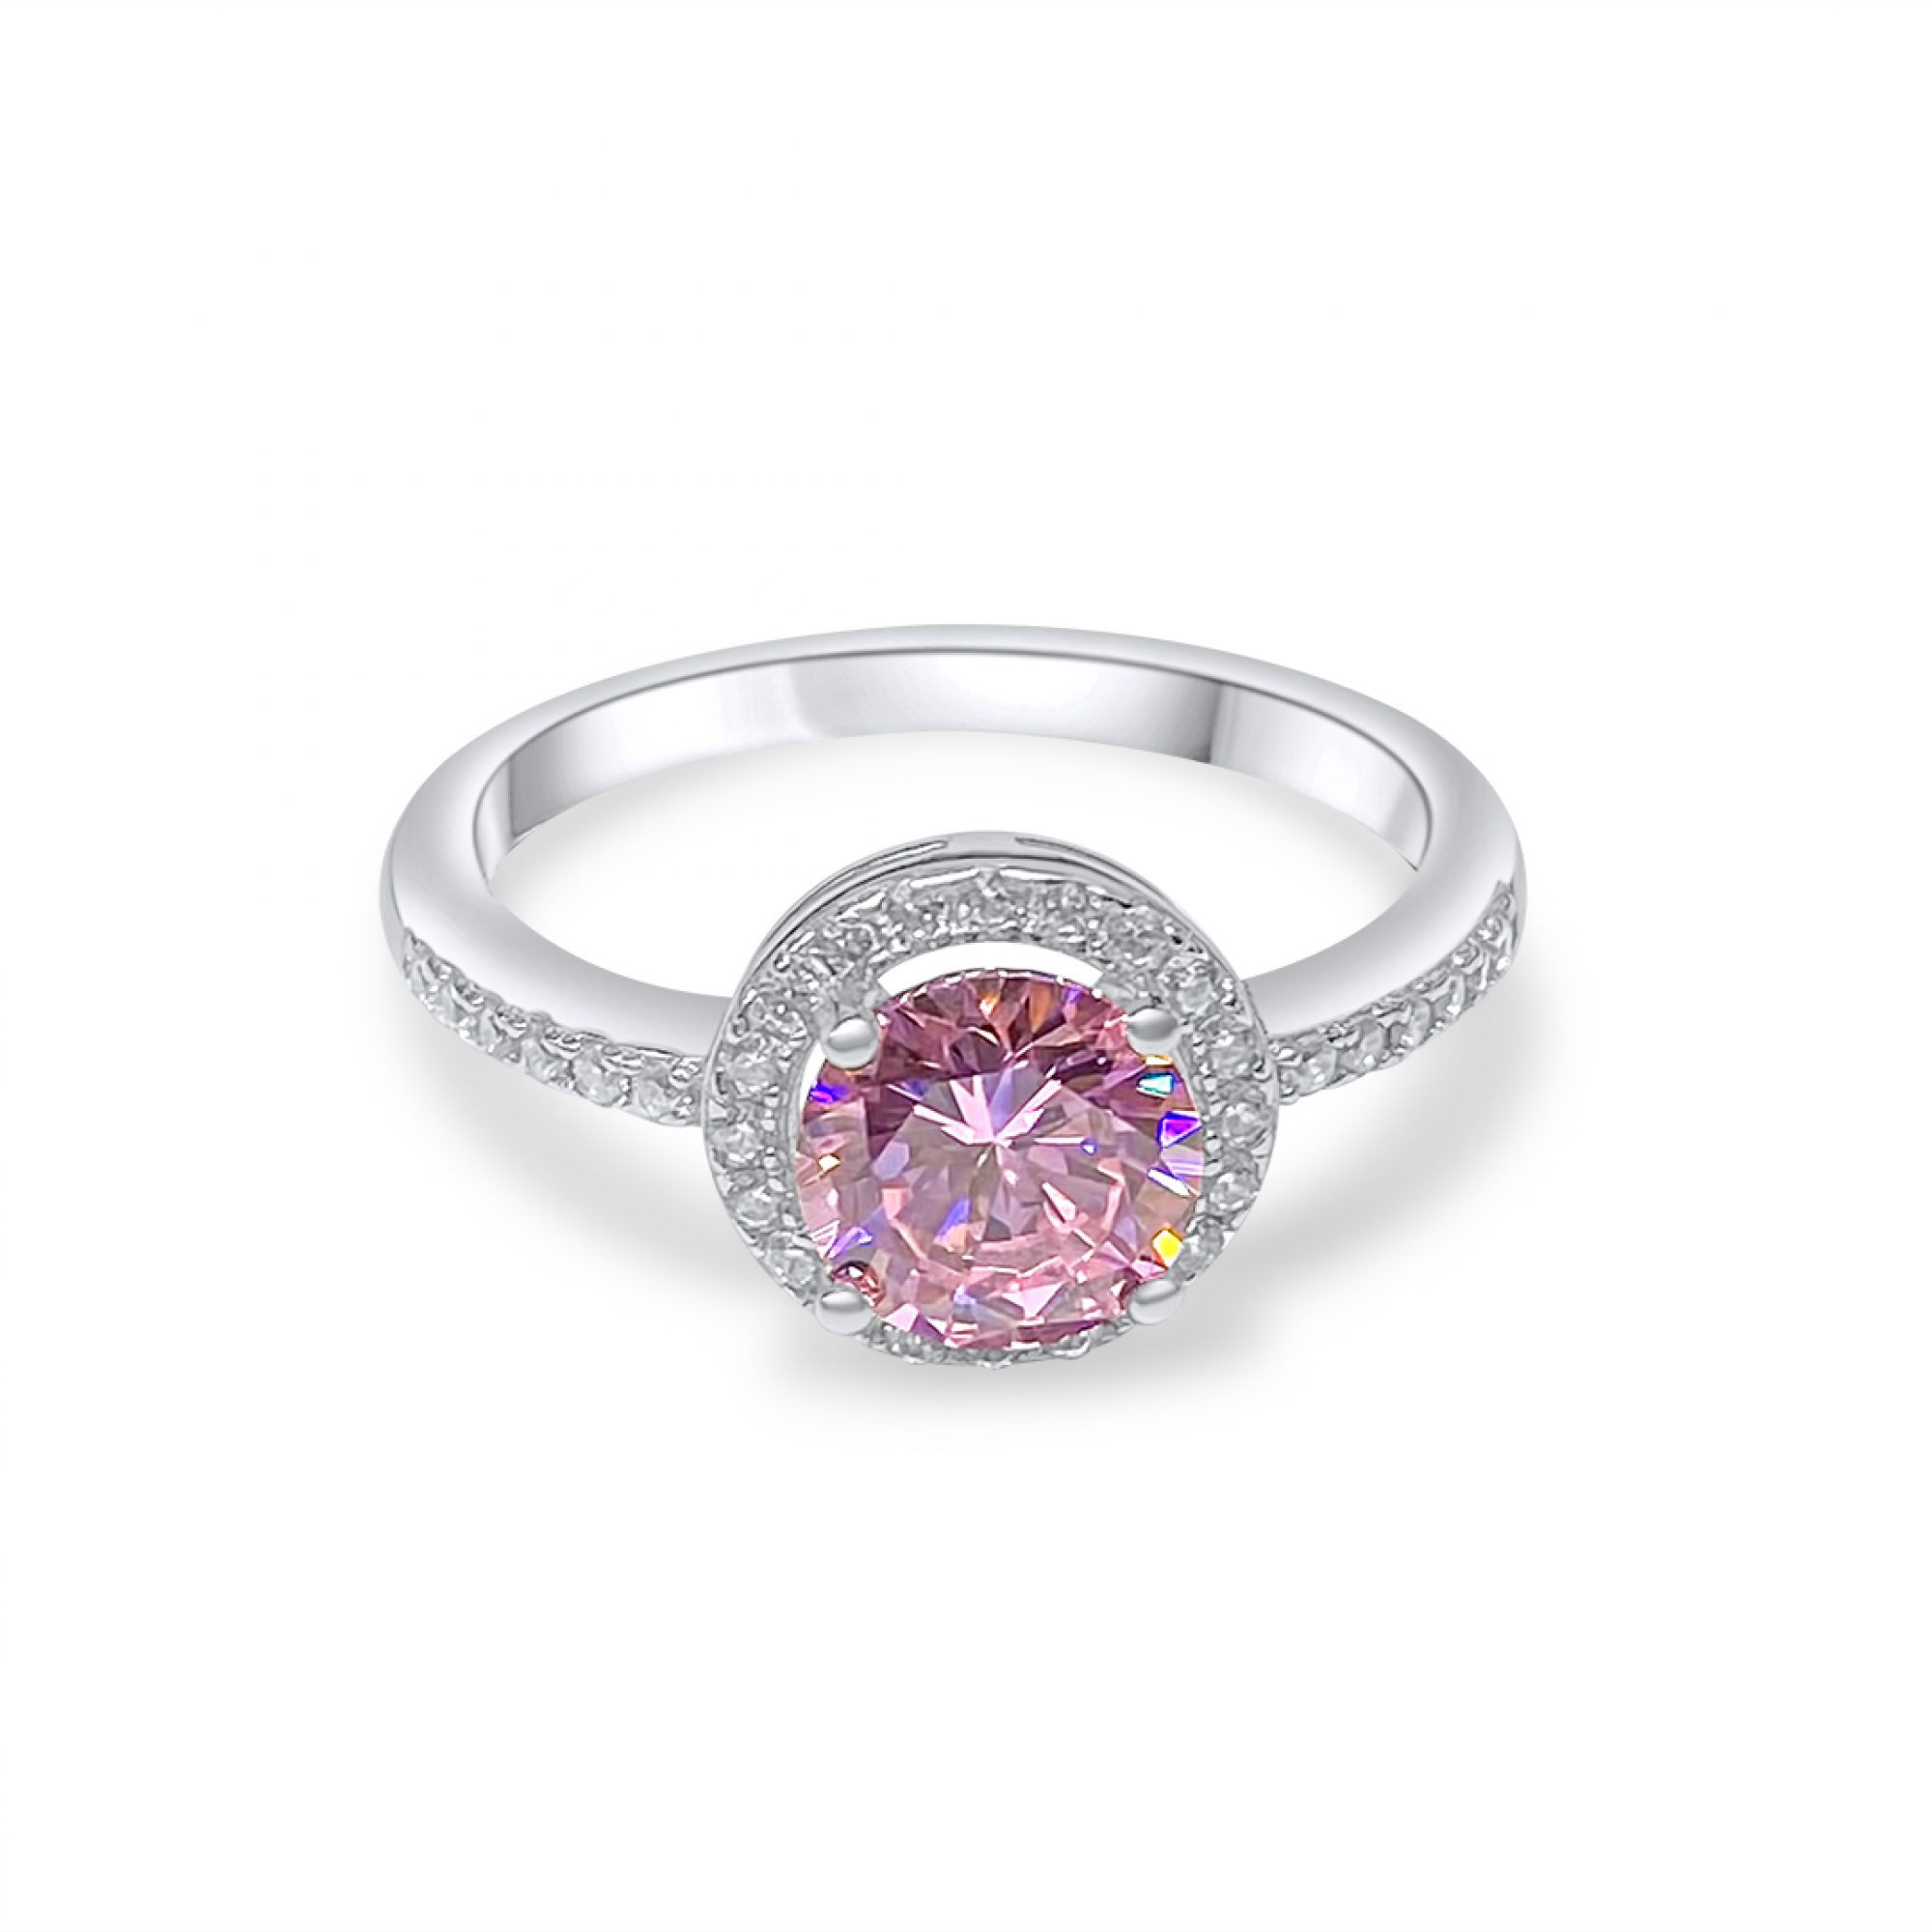 Ring with pink quartz and zircon stones